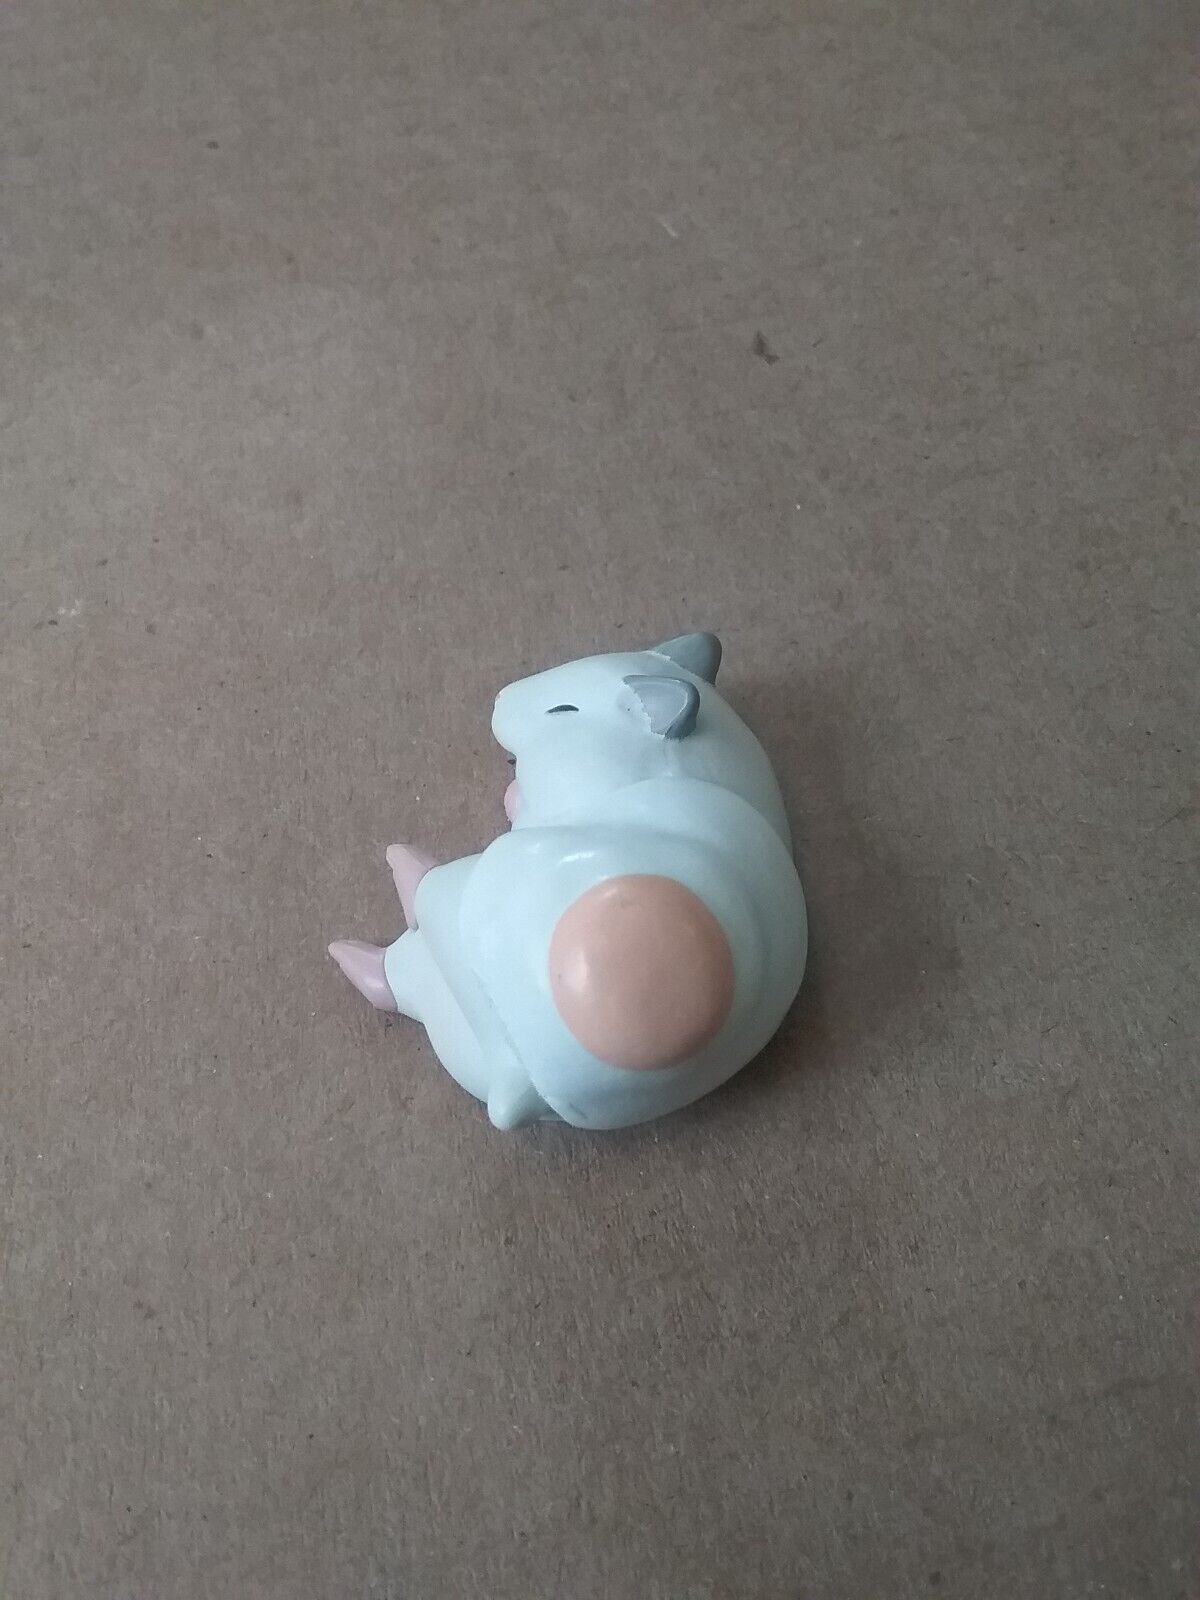 RARE Trading Figure Goodnight White Ham And Egg 2 Kinkuma Hamster Toy